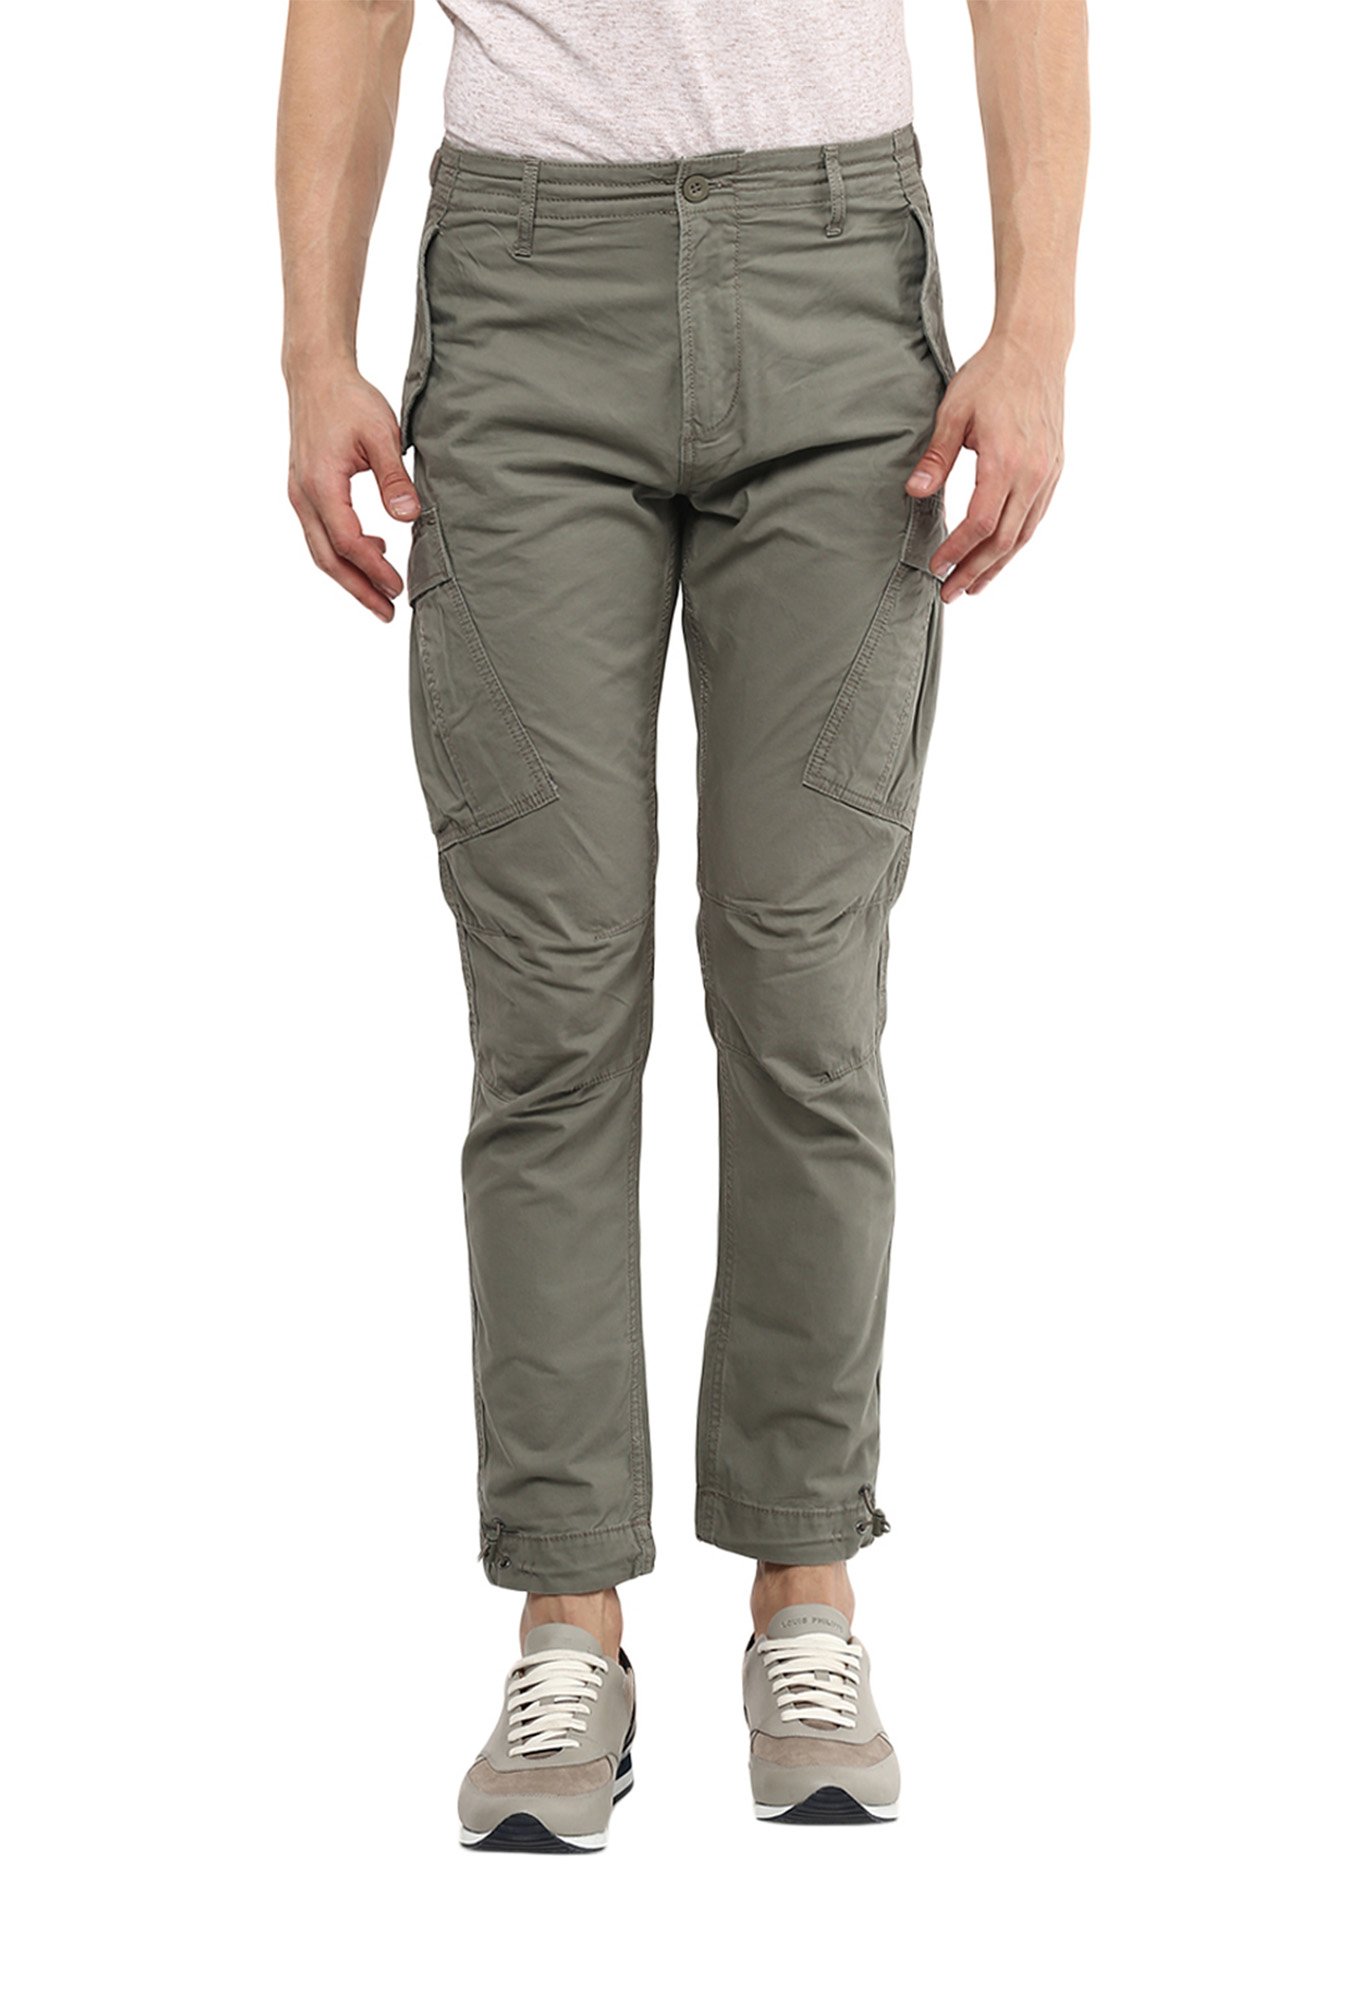 Celio Slim Fit Men Grey Trousers - Buy Celio Slim Fit Men Grey Trousers  Online at Best Prices in India | Flipkart.com